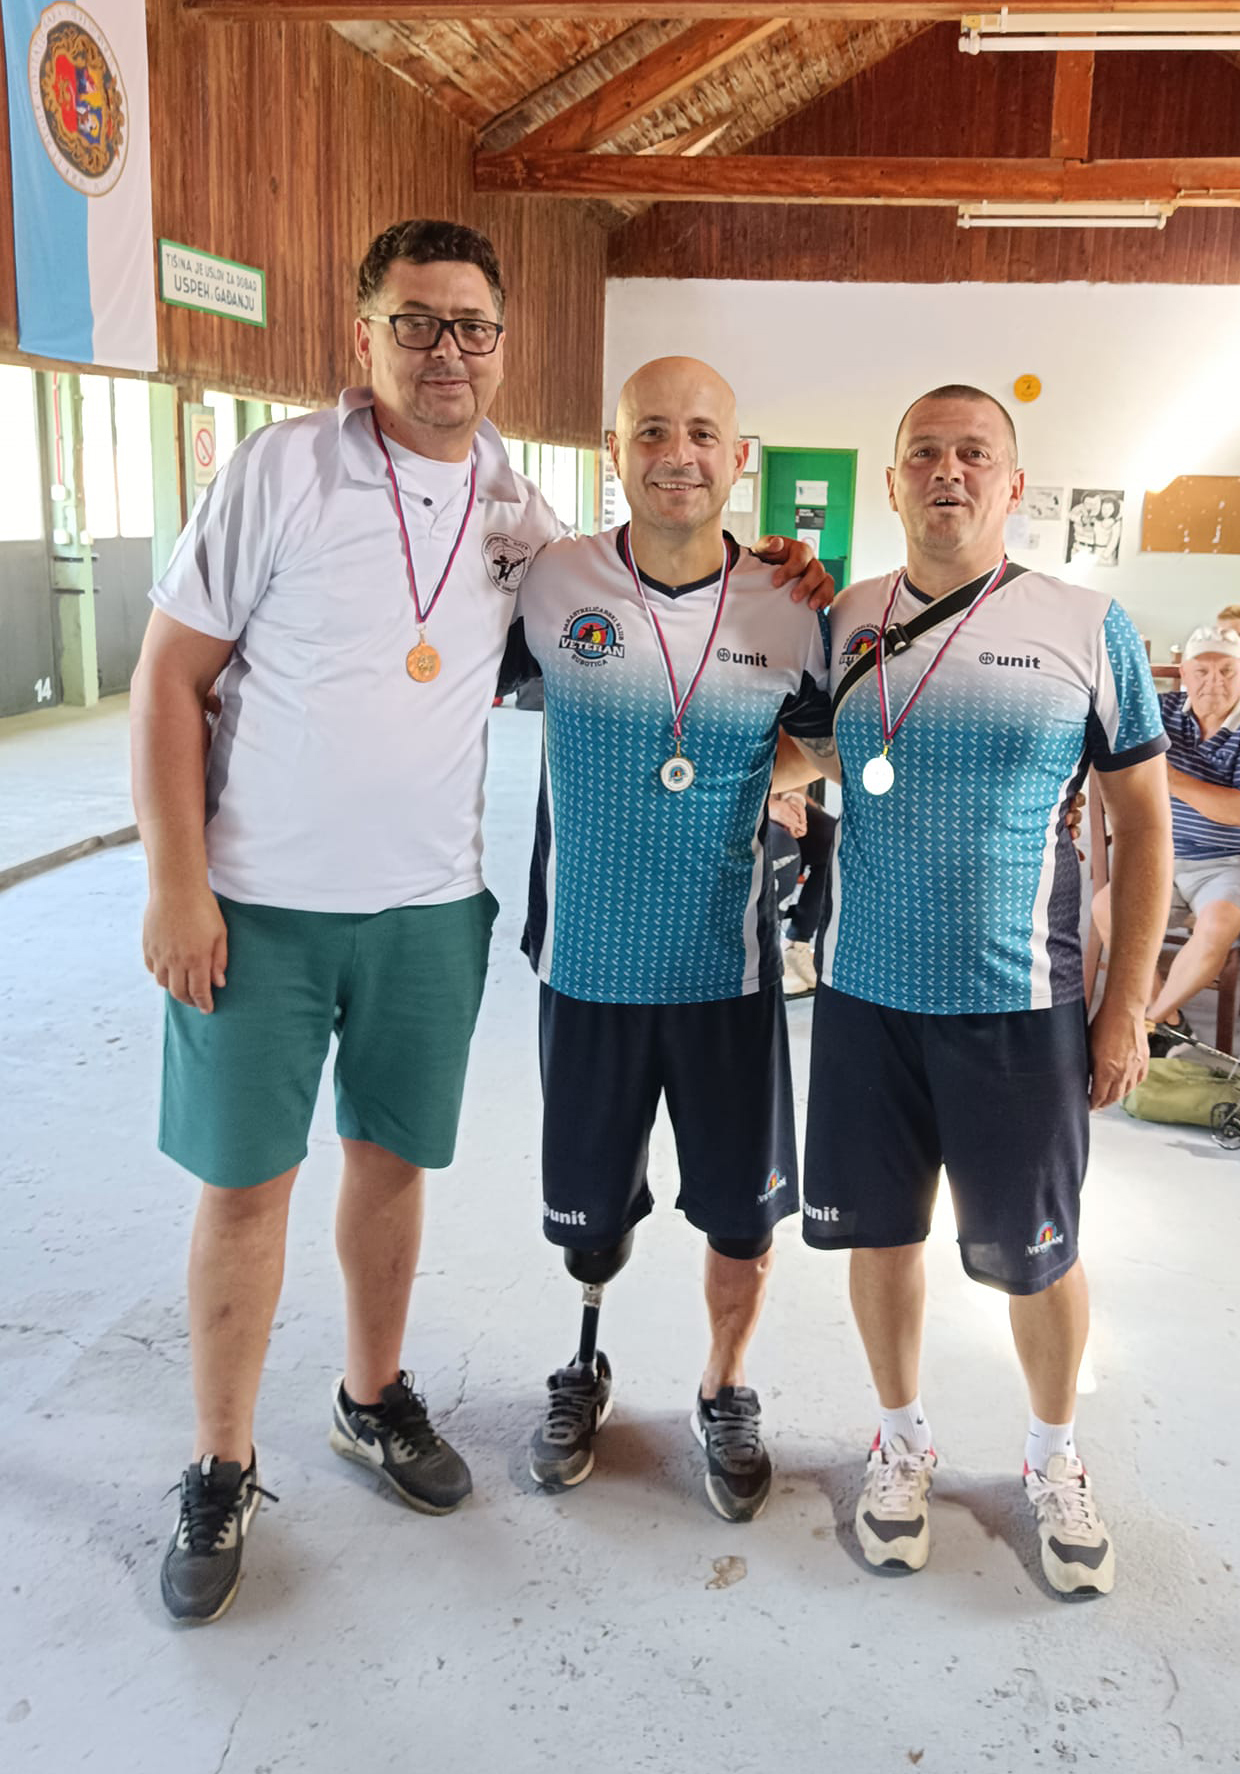 Subotički parastreličatri osvojili četiri medalje na prvenstvu Srbije